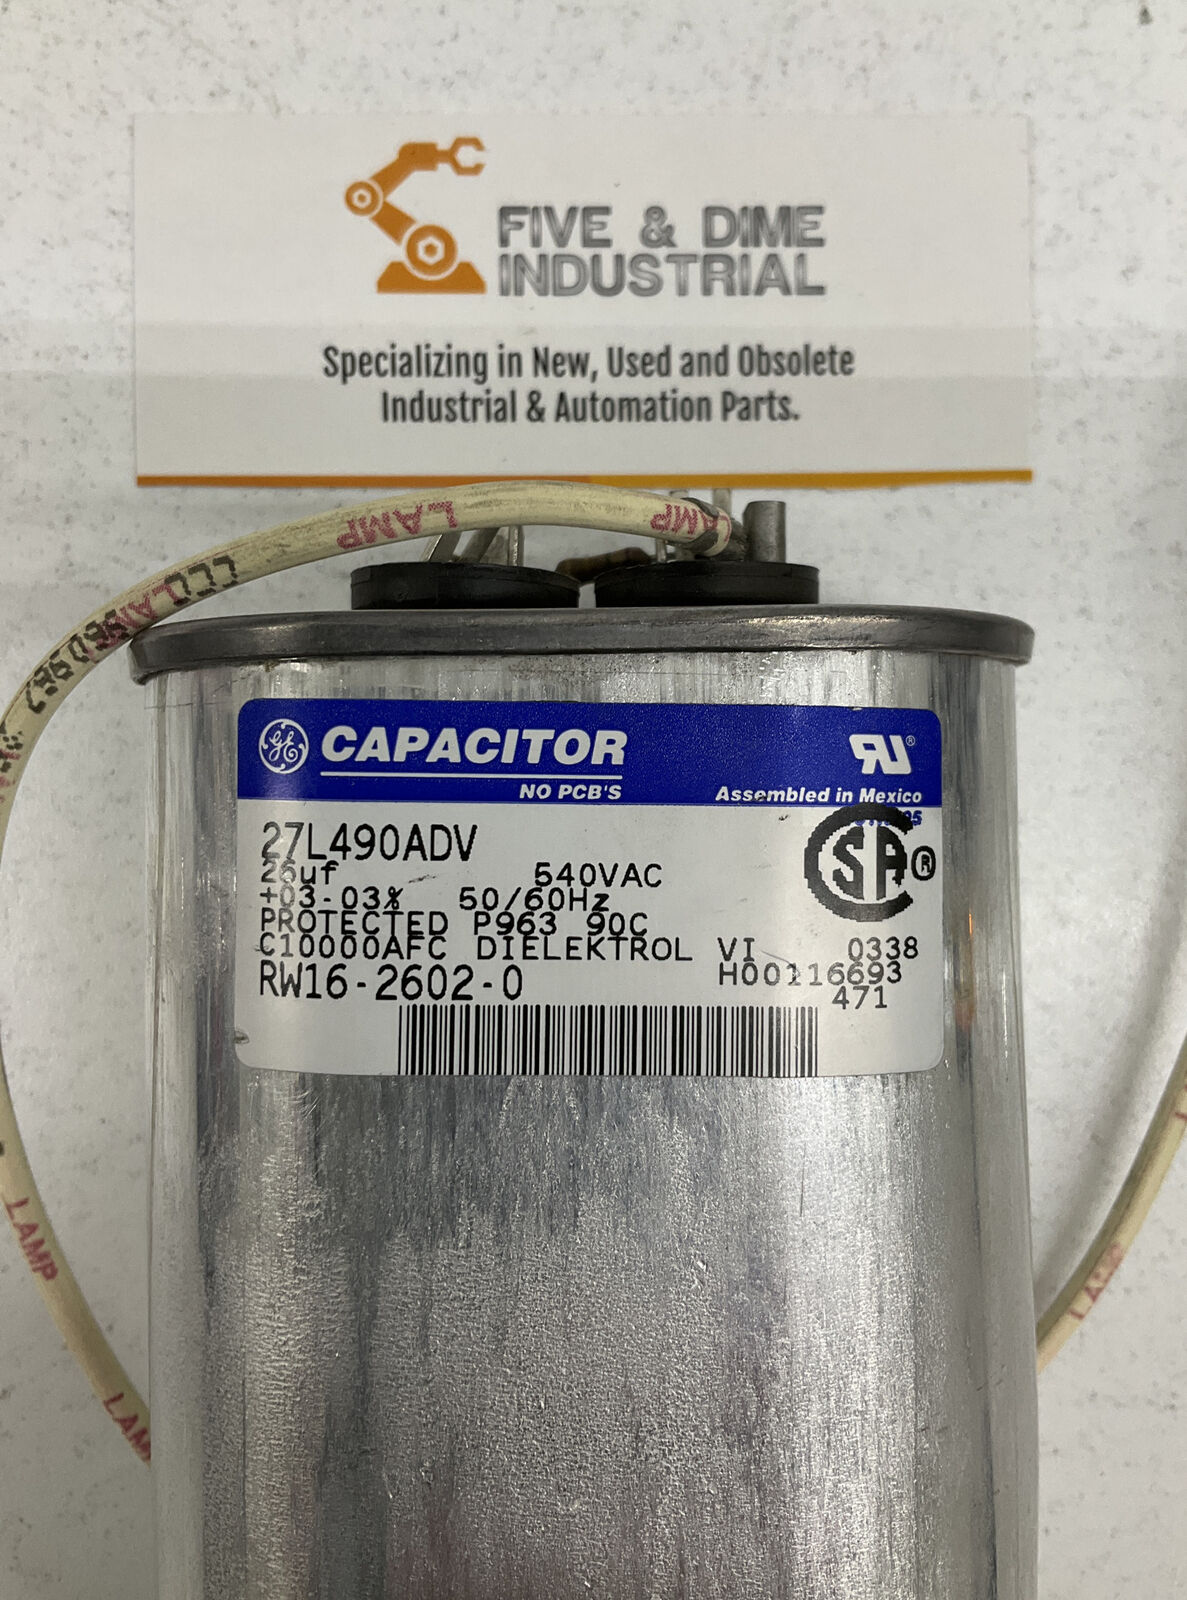 GE Capacitor 27L490ADV 26µf +03 - 03% 50/60 Hz  540VAC (BL206) - 0